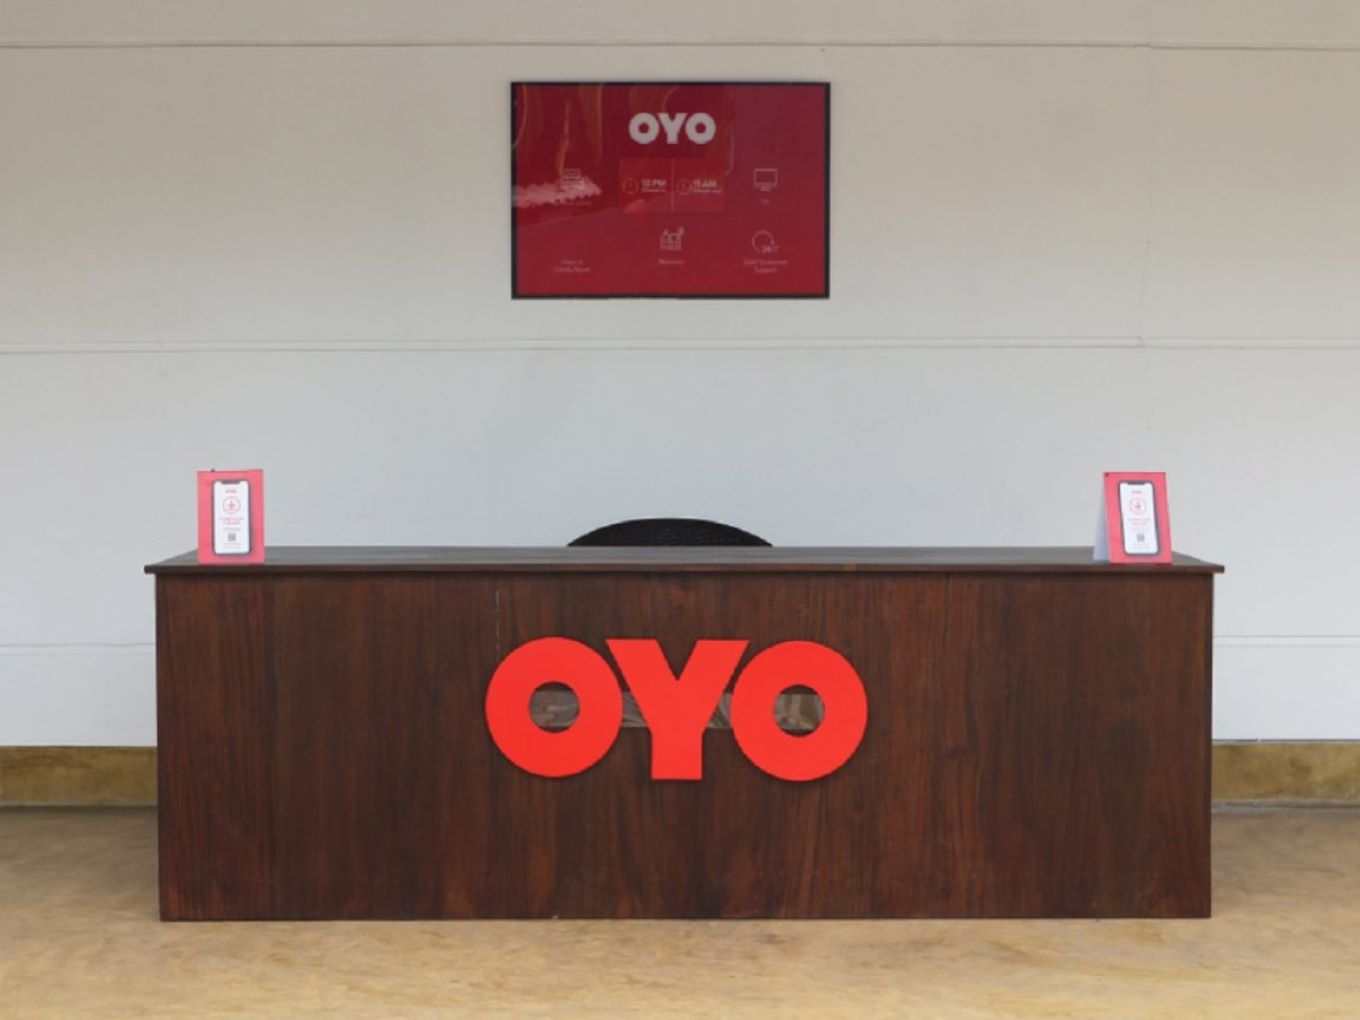 OYO Appoints Former SBI Chief Rajnish Kumar as Strategic Group Advisor